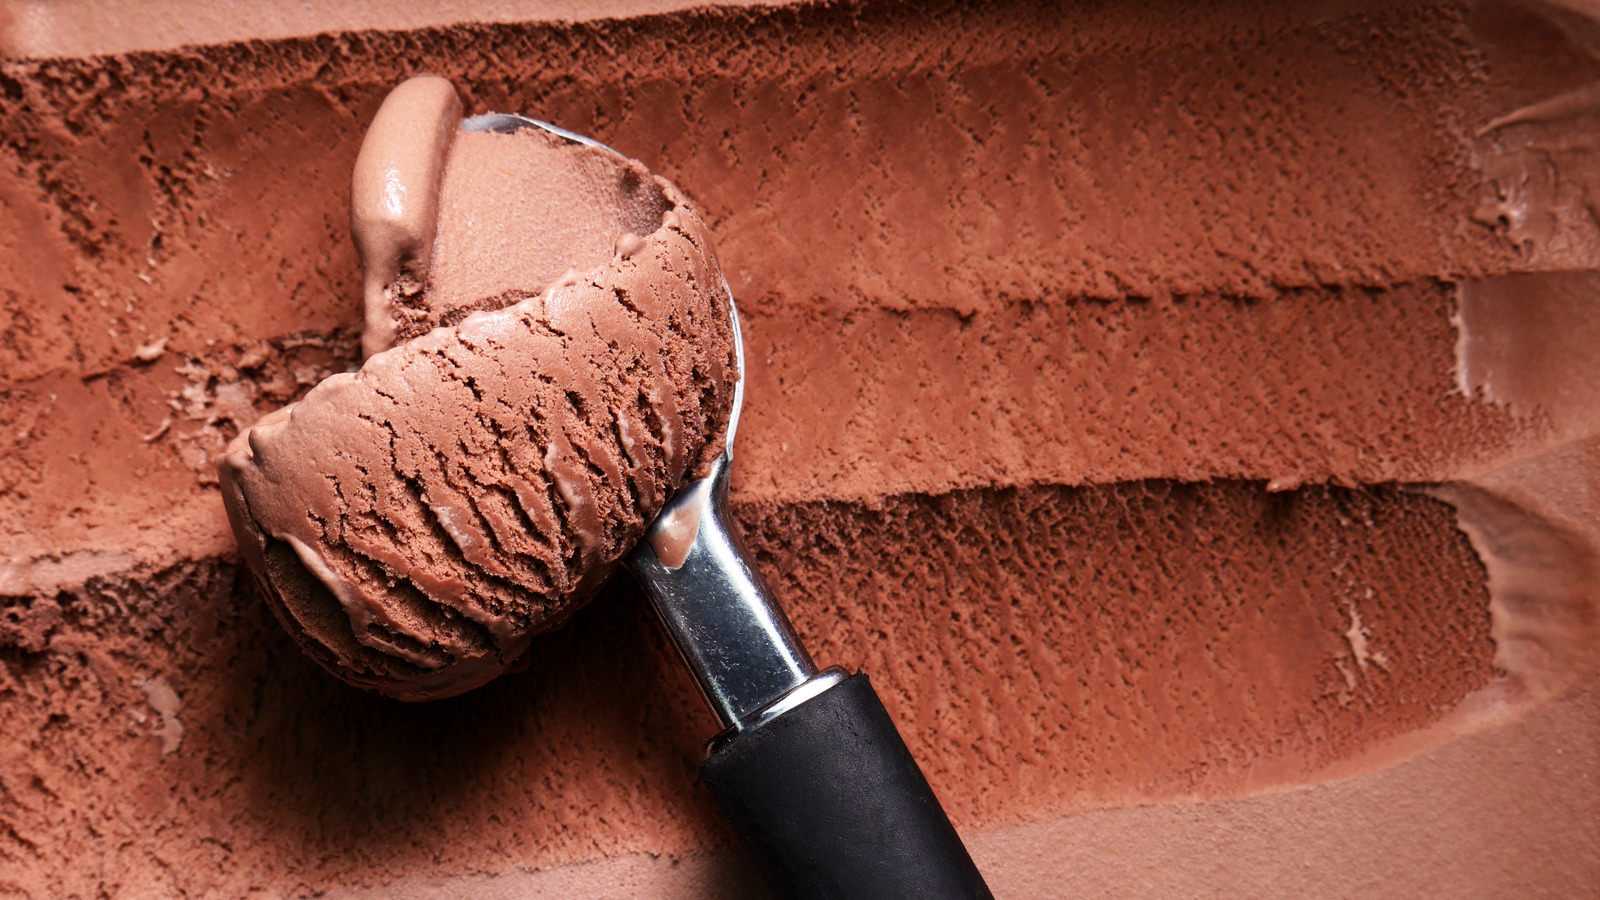 Tasty Classic Ice Cream Scoop, Stainless Steel Textured Scoop